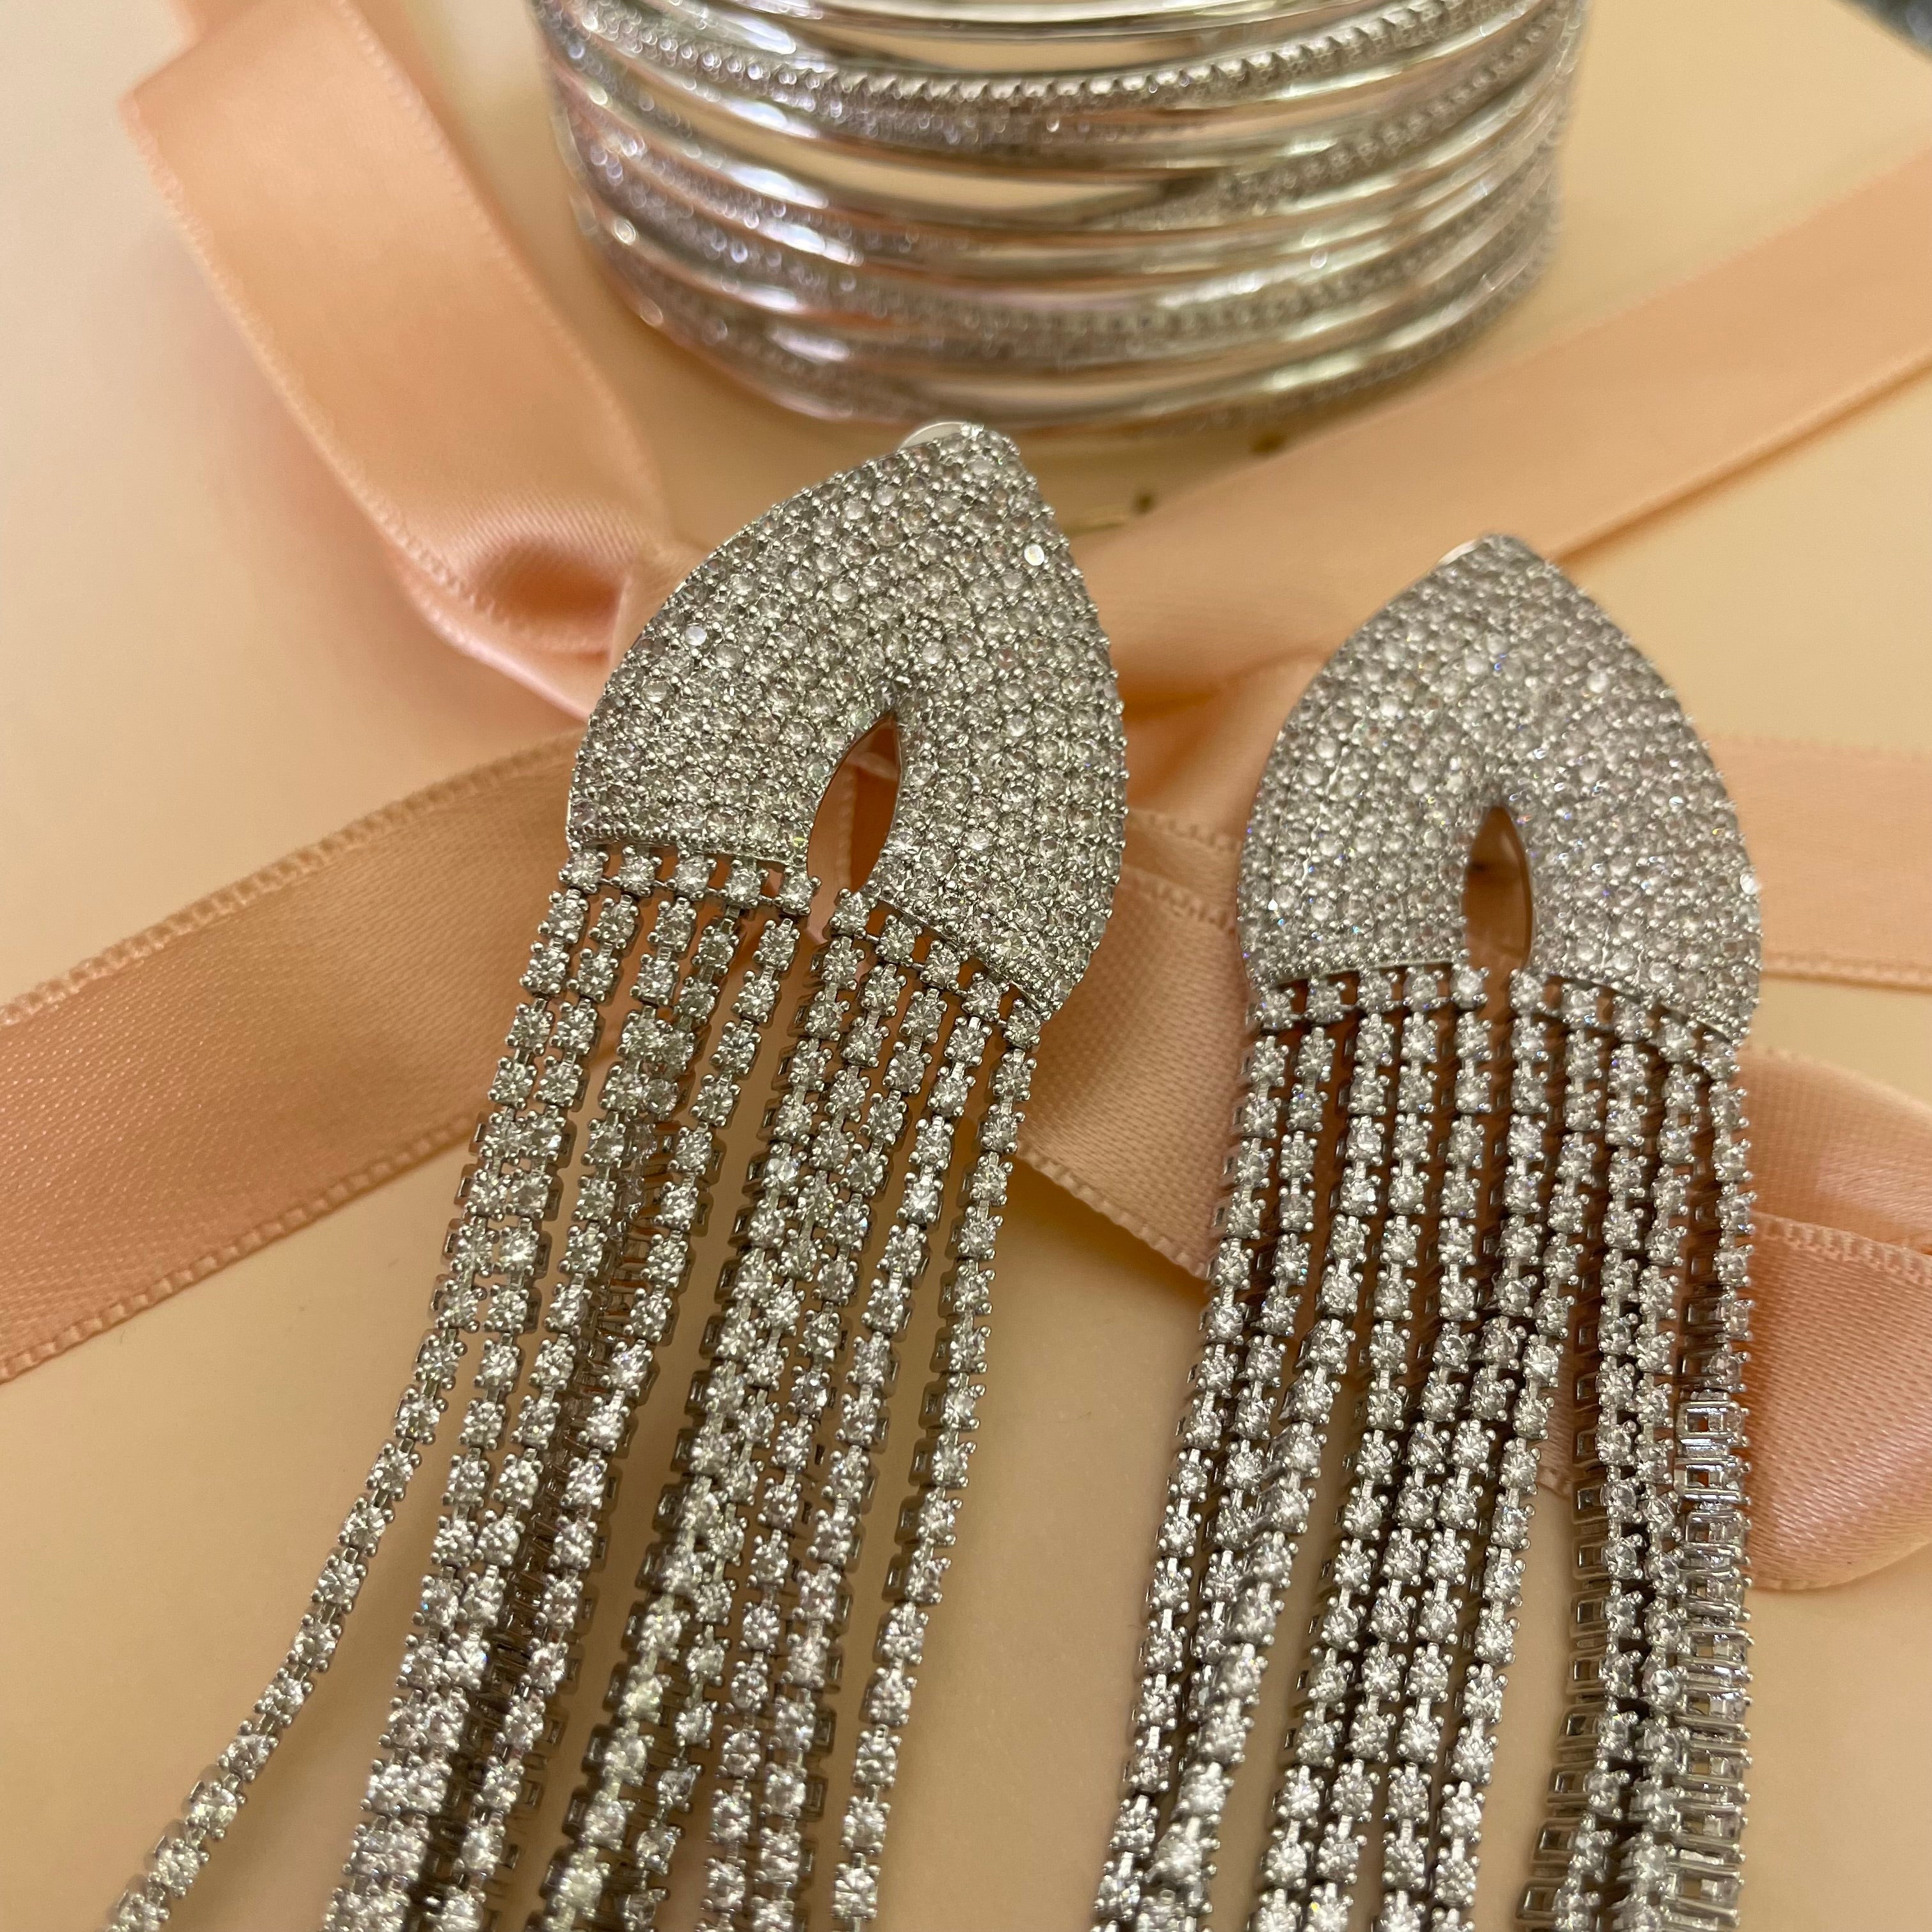 Earrings and bangle